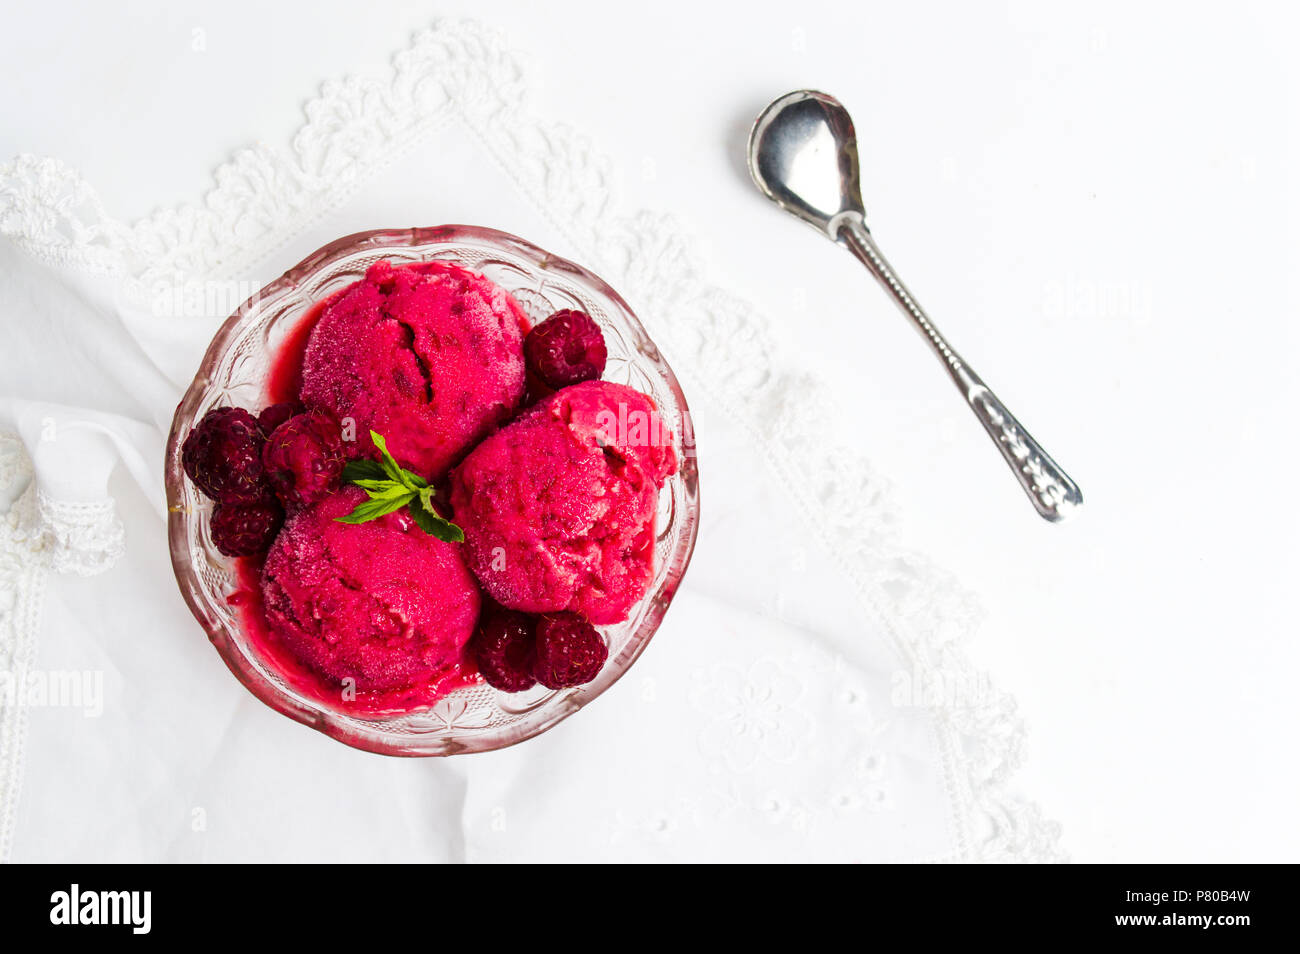 https://c8.alamy.com/comp/P80B4W/raspberry-ice-cream-scoops-in-a-bowl-on-white-P80B4W.jpg